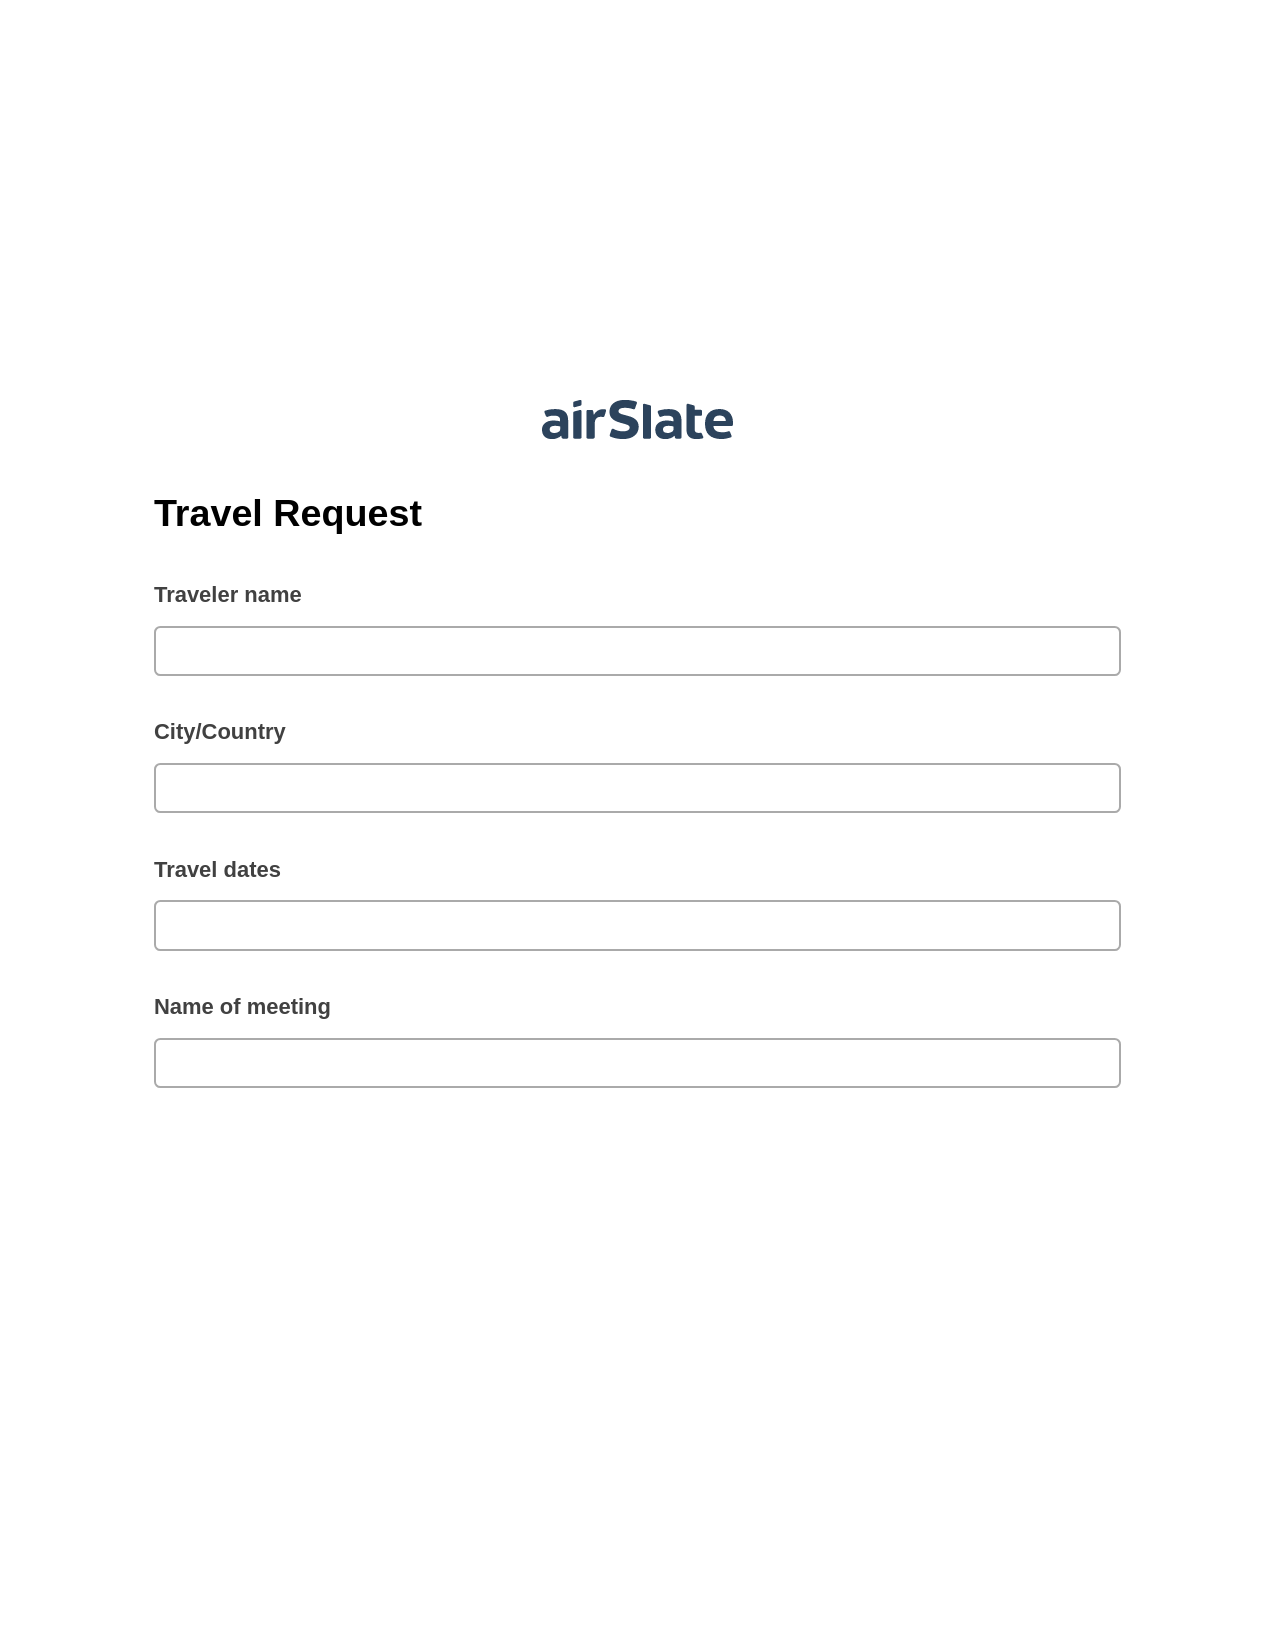 Travel Request Pre-fill Dropdowns from Smartsheet Bot, Create slate addon, Export to Smartsheet